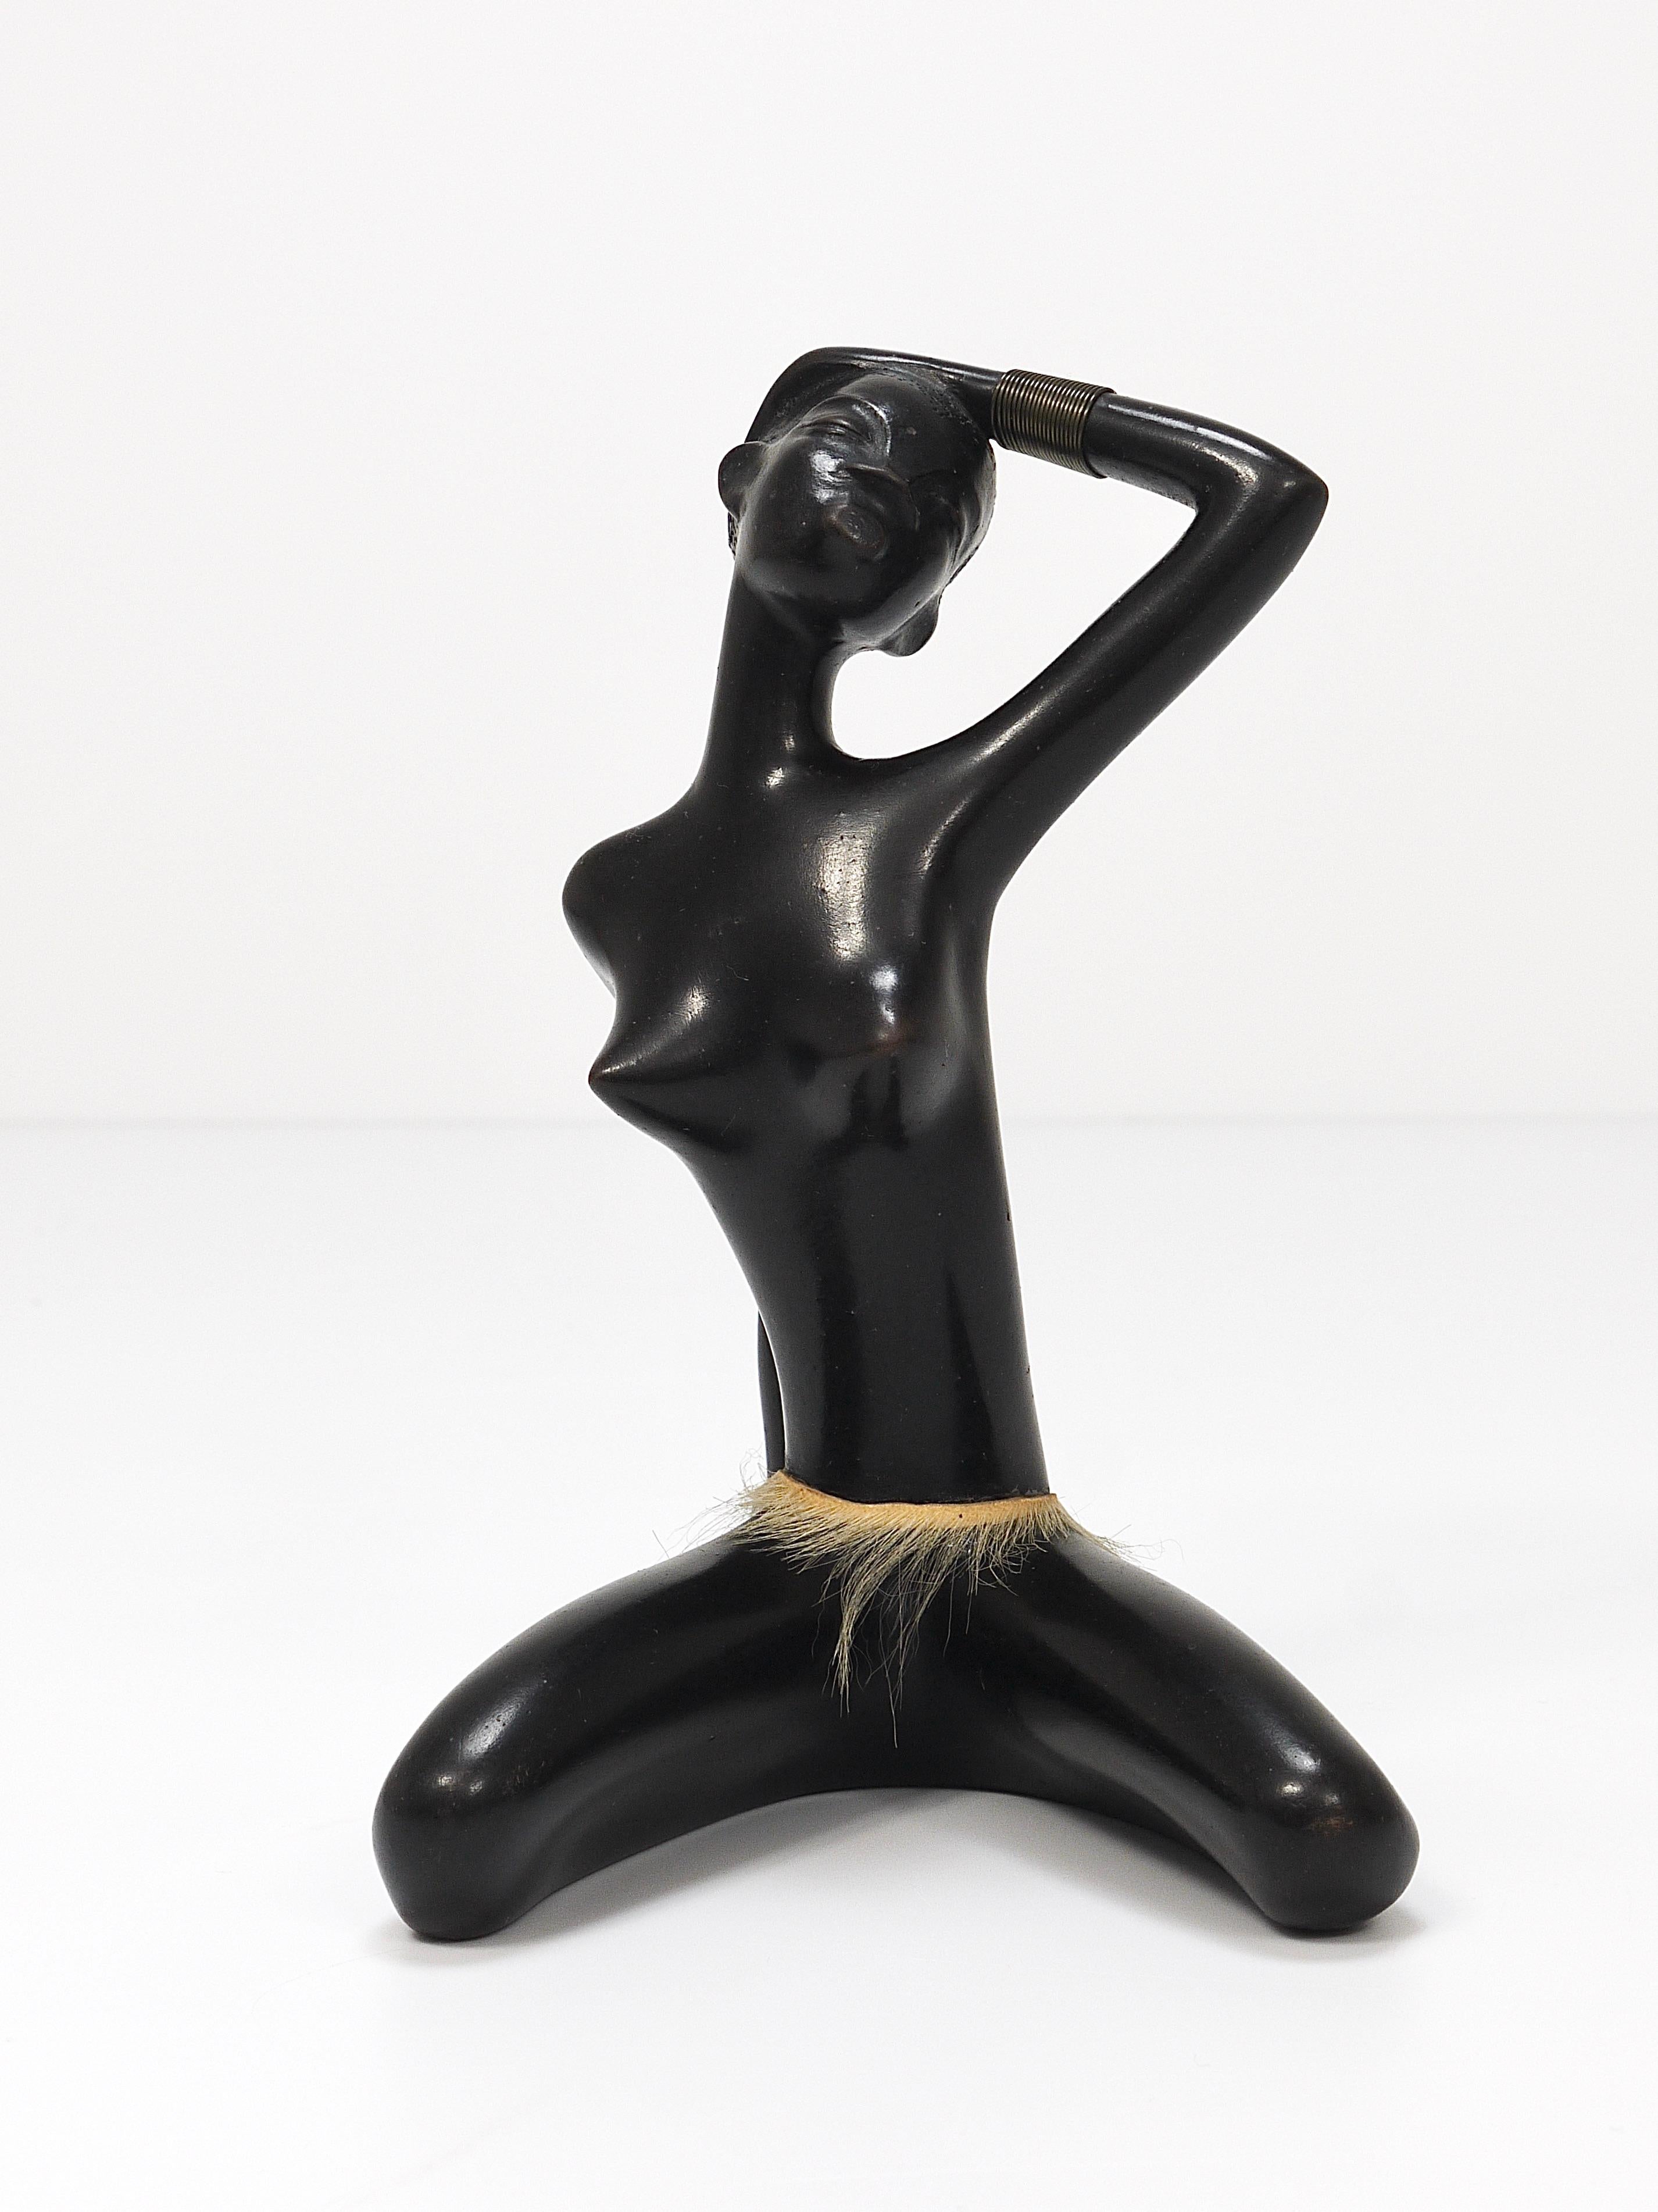 Glazed African Woman Figurine Sculpture by Leopold Anzengruber, Vienna, Austria, 1950s For Sale